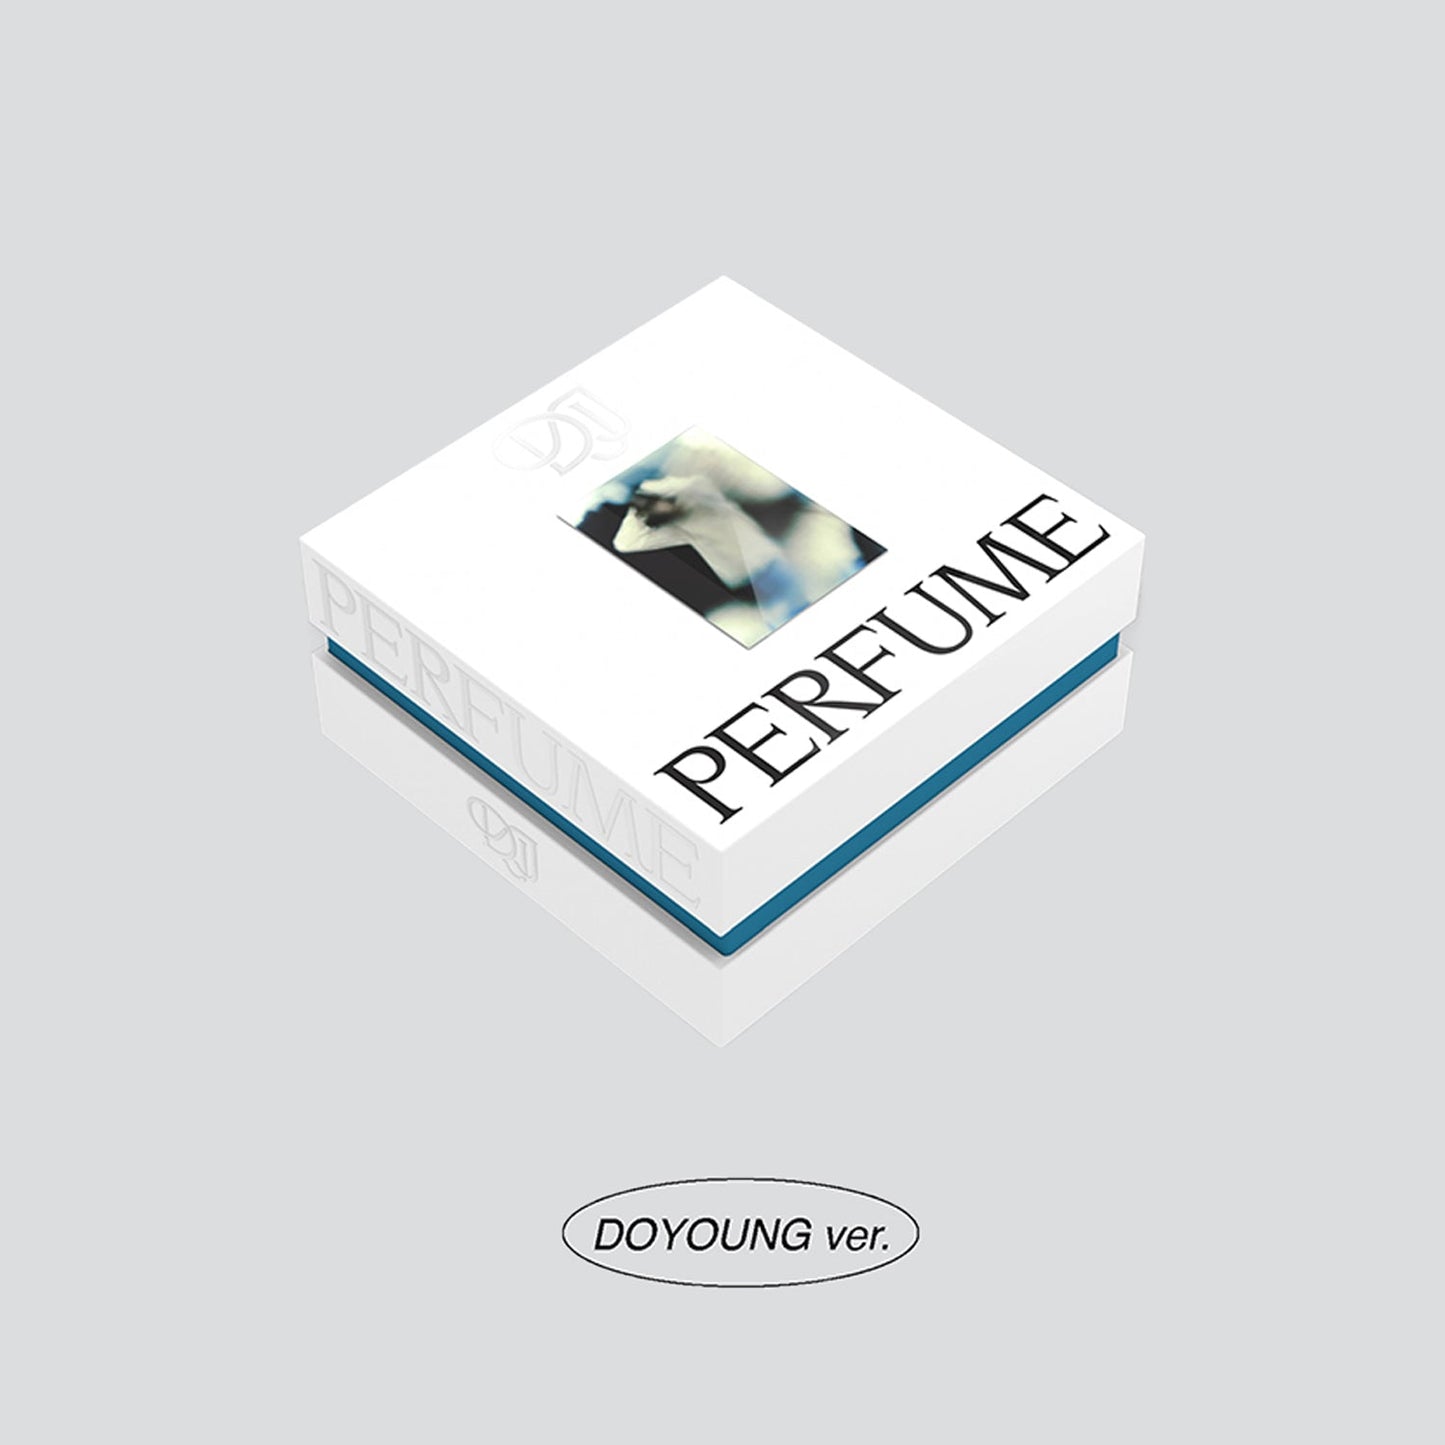 NCT DOJAEJUNG 1ST MINI ALBUM 'PERFUME' (BOX) DOYOUNG VERSION COVER